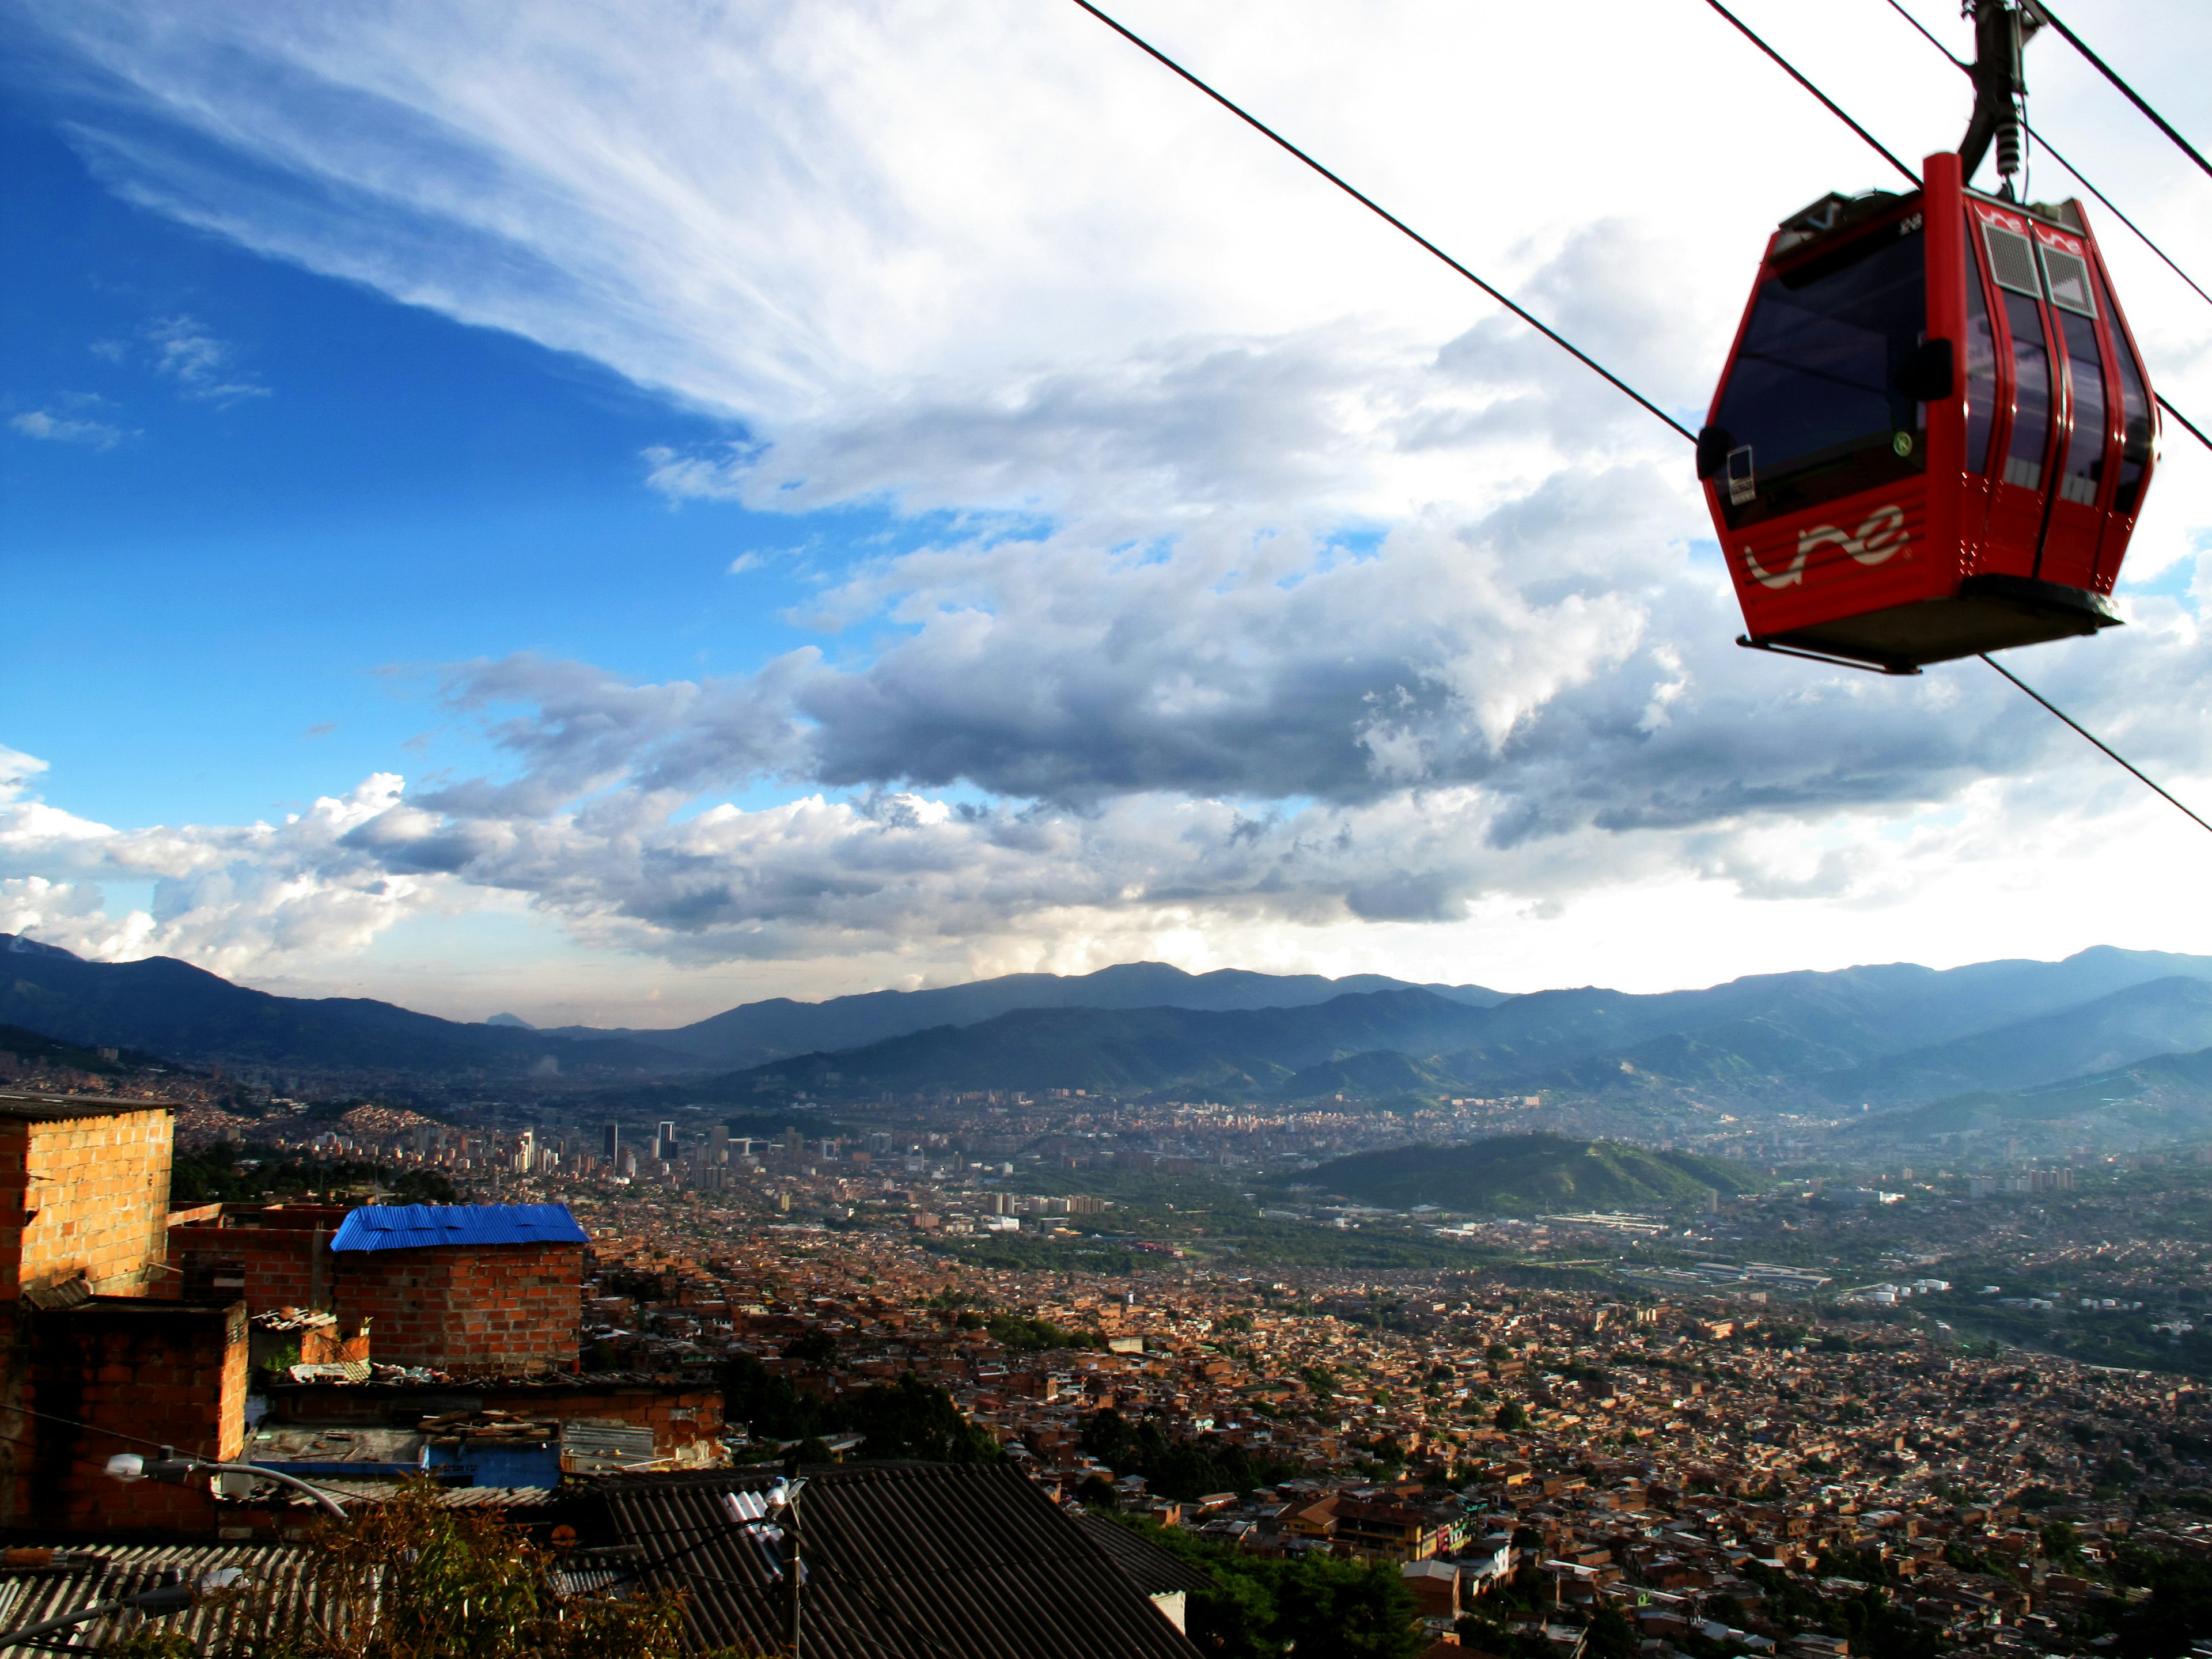 Cable car from Danto Domingo Savio, Medellín.